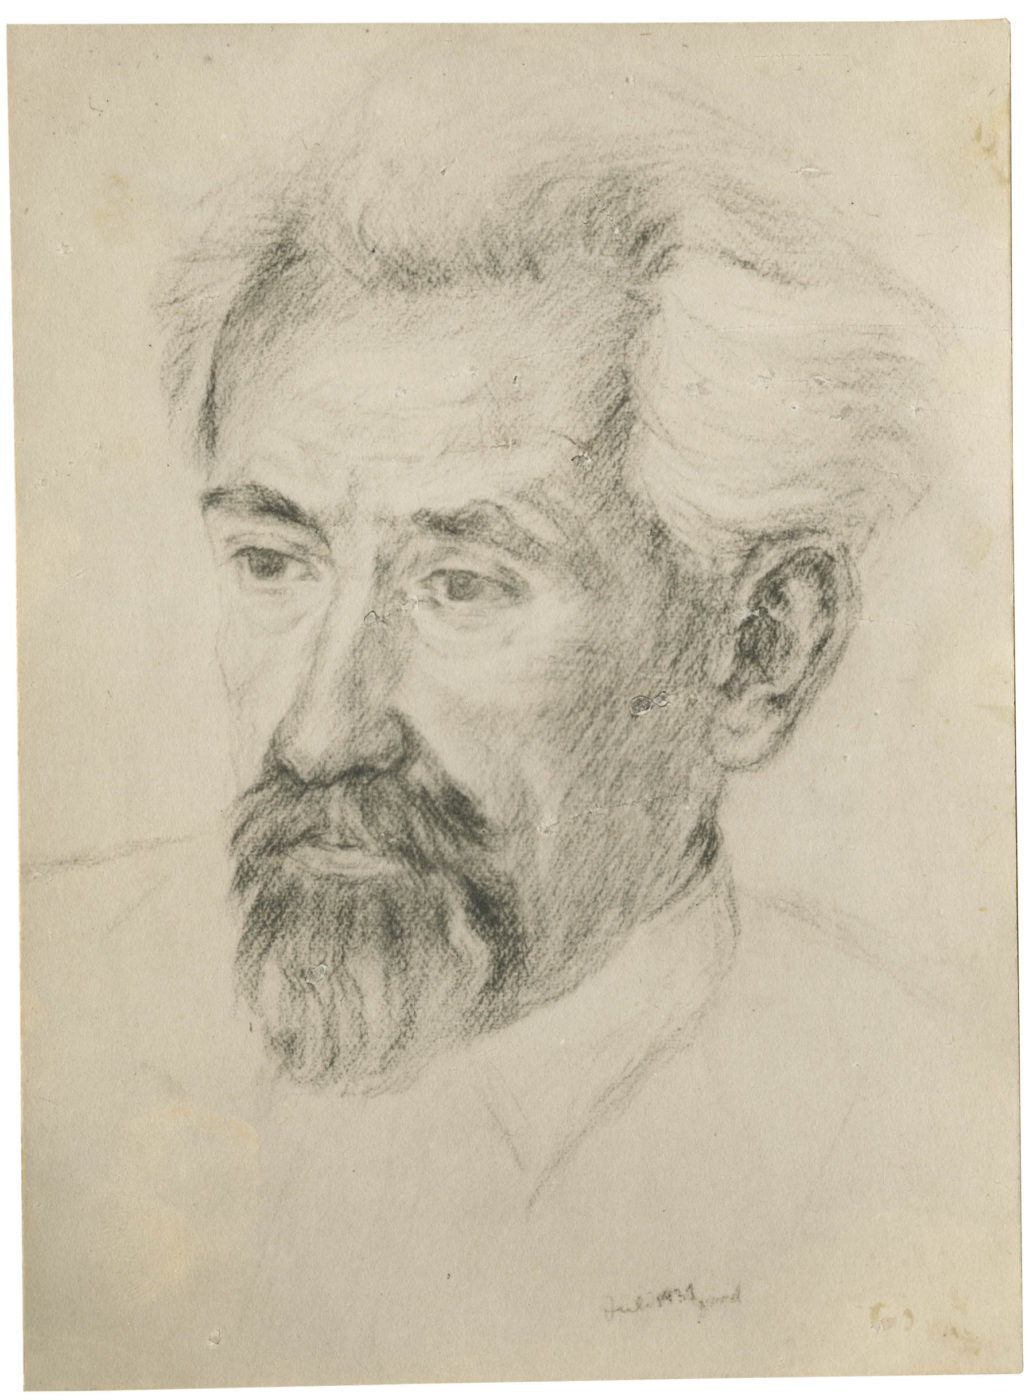 Portrait sketch of a man